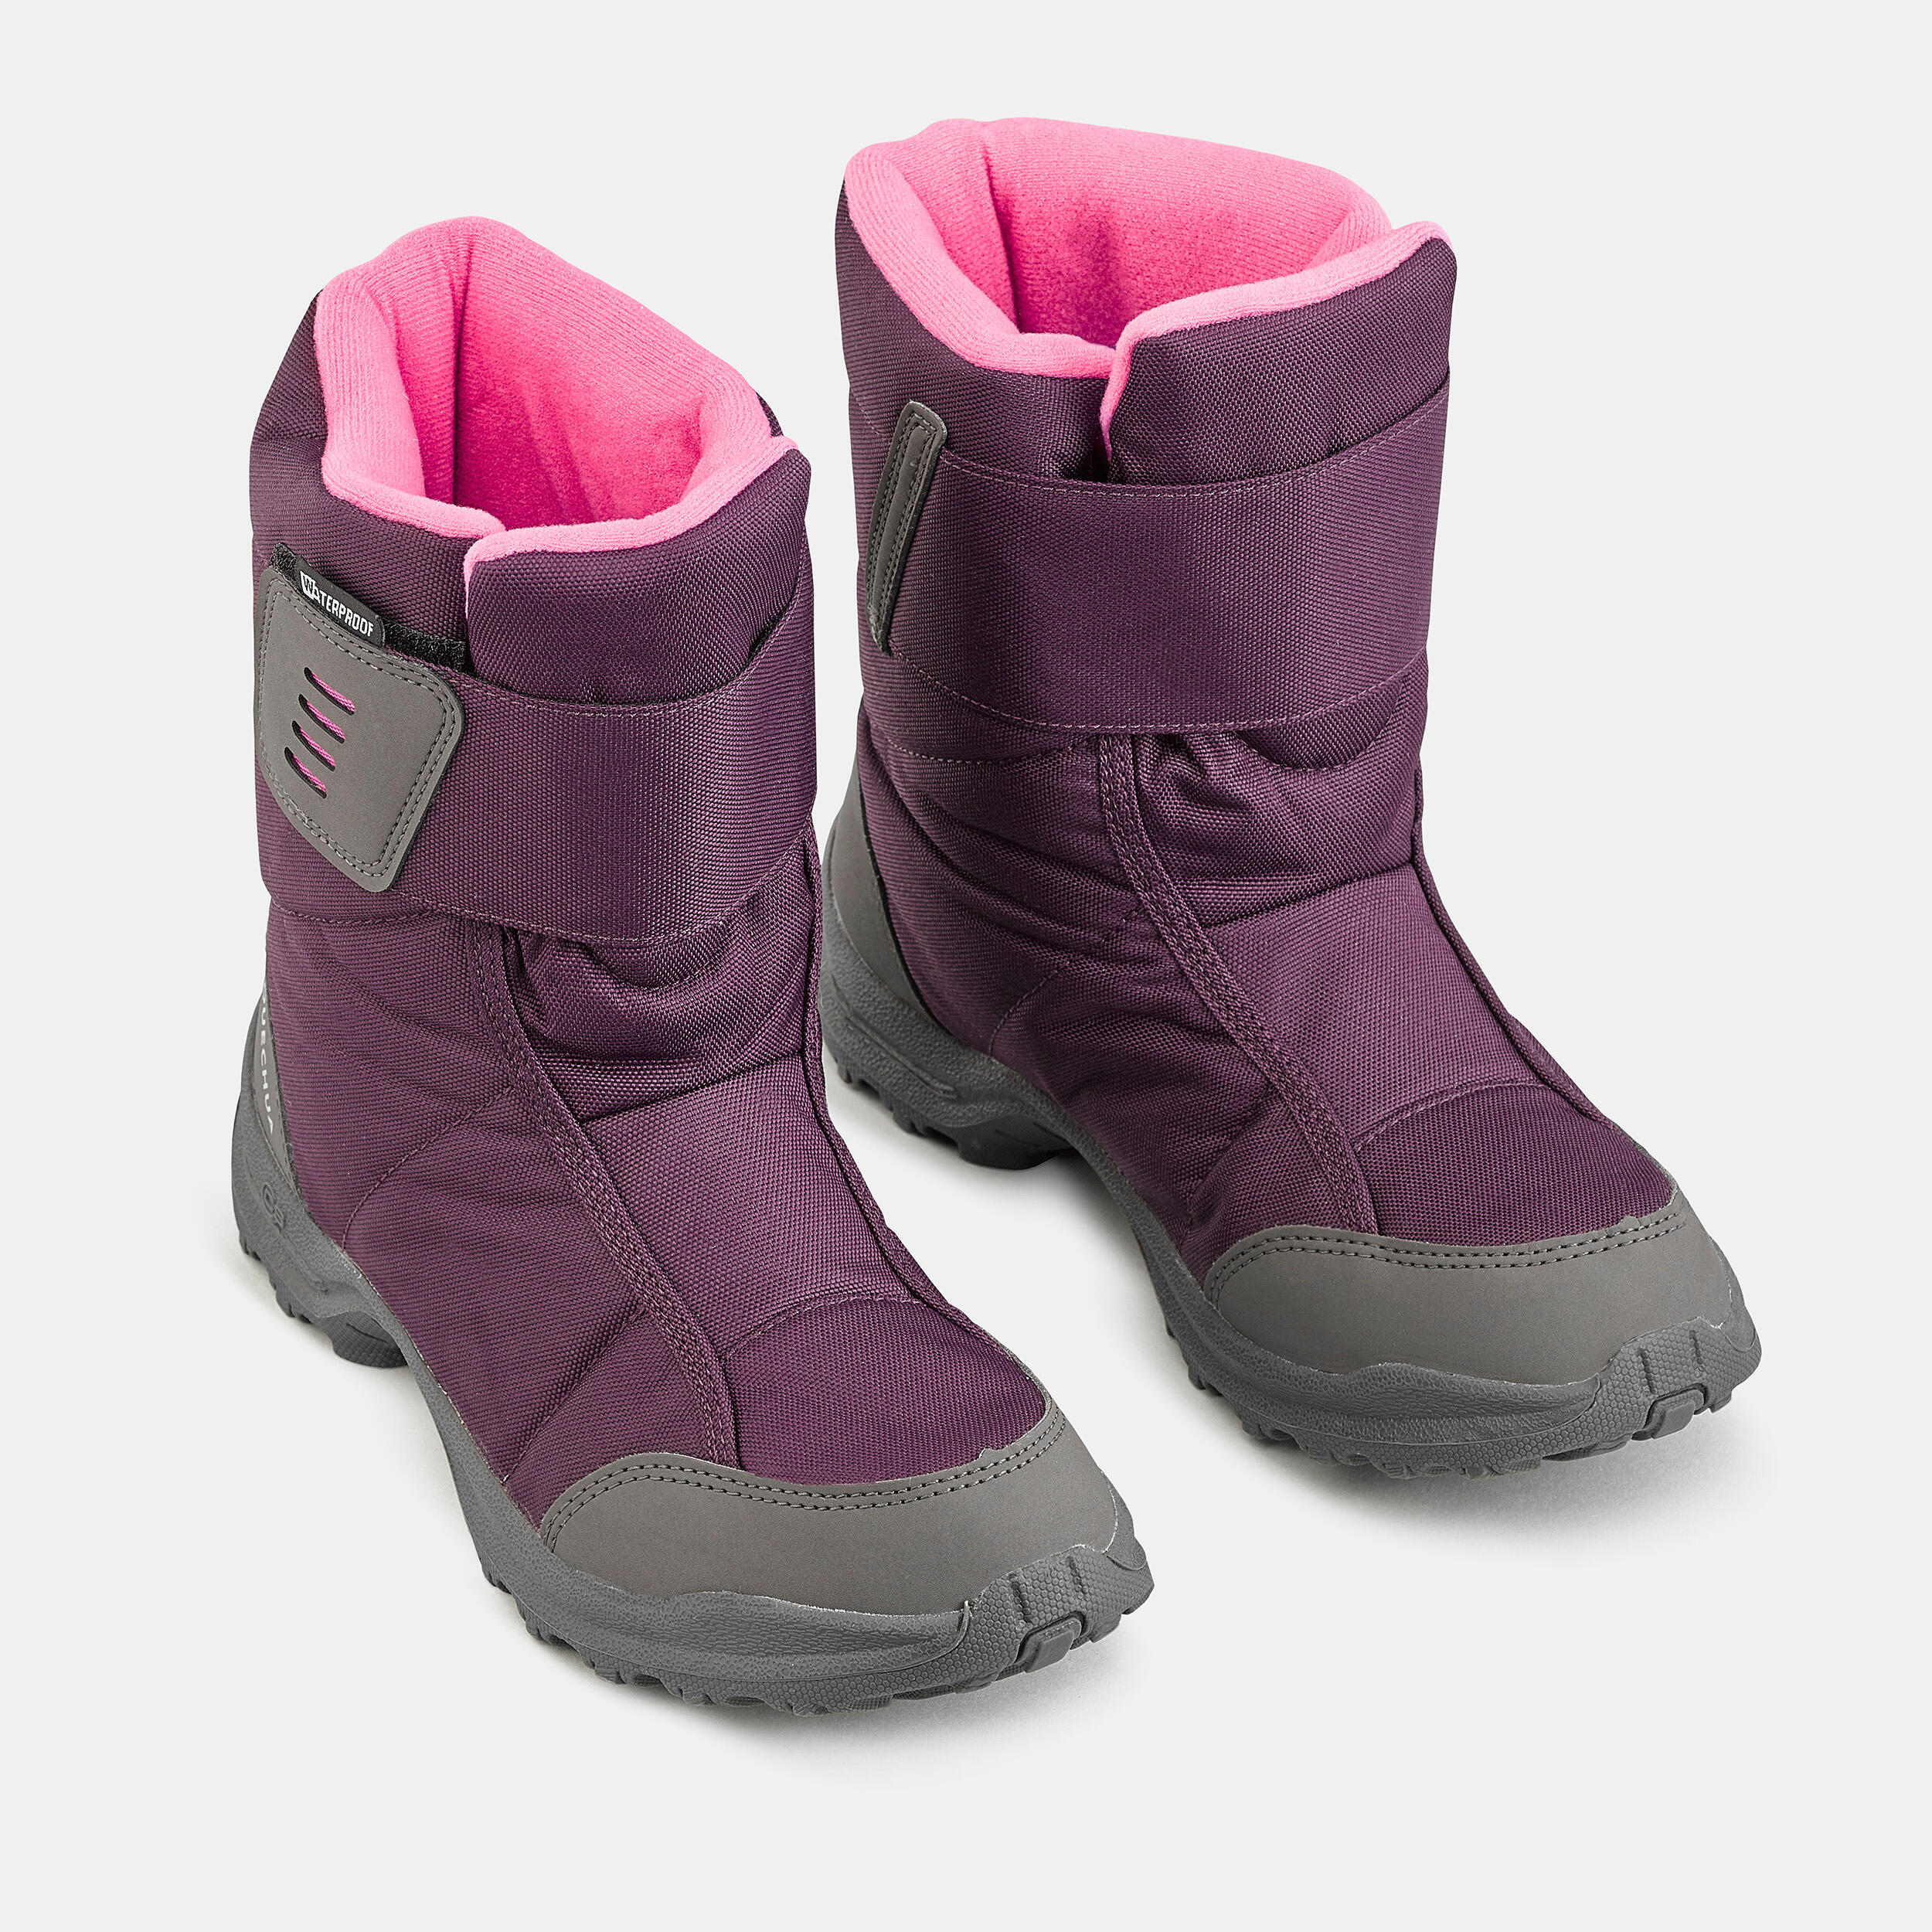 Kids’ warm waterproof snow hiking boots SH100 - Velcro Size 7 - 5.5  4/7